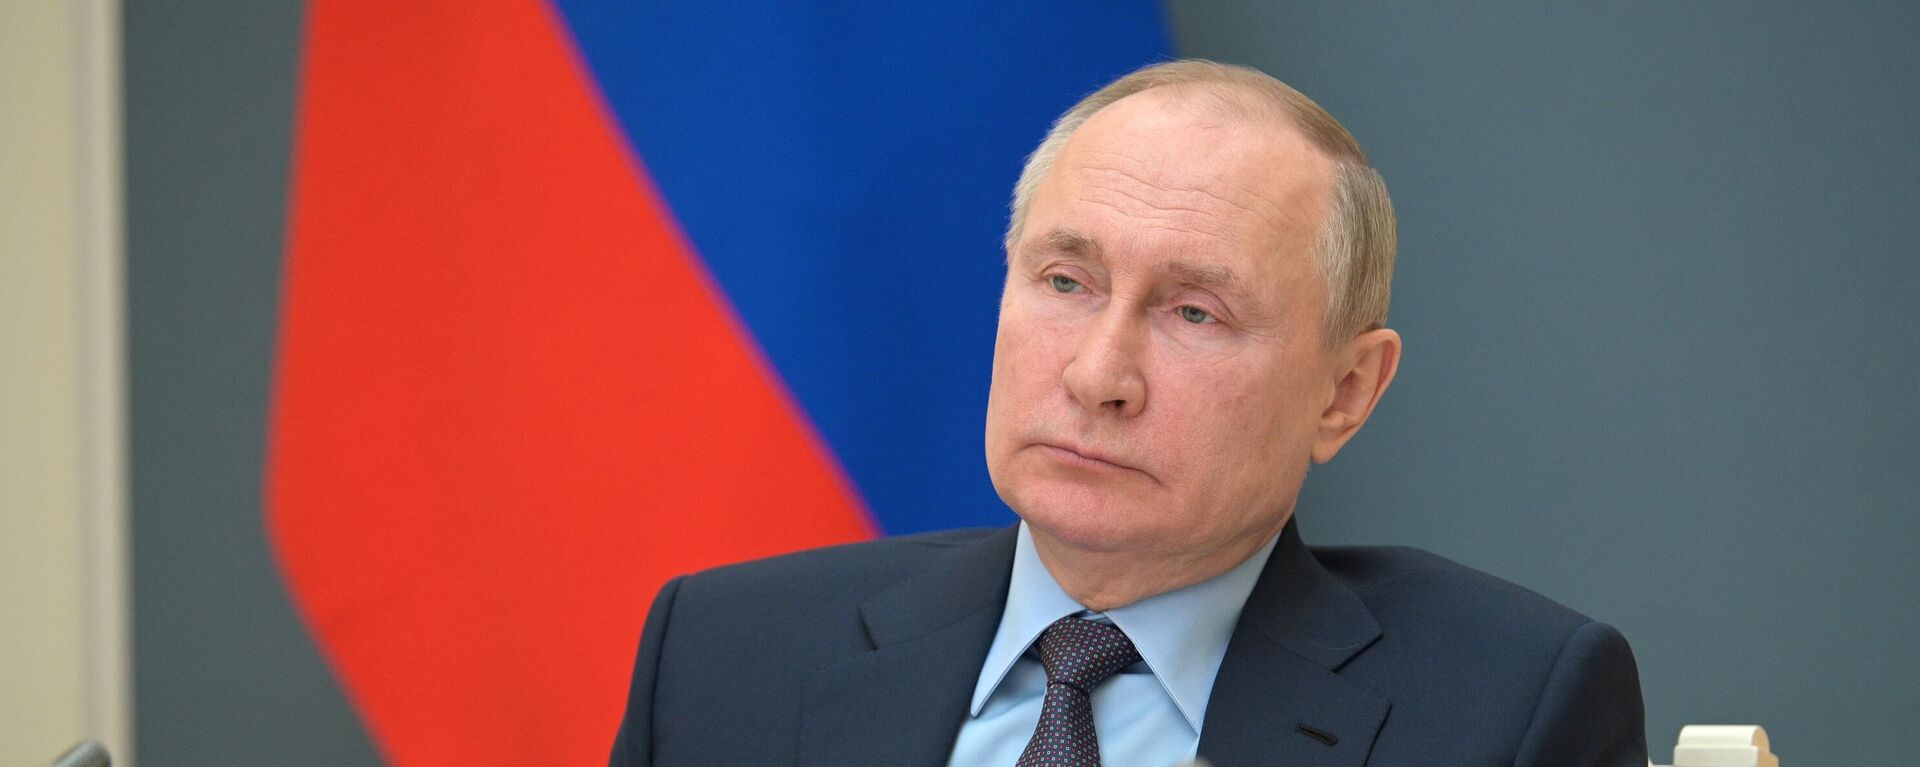 Vladímir Putin, el presidente ruso - Sputnik Mundo, 1920, 14.06.2021